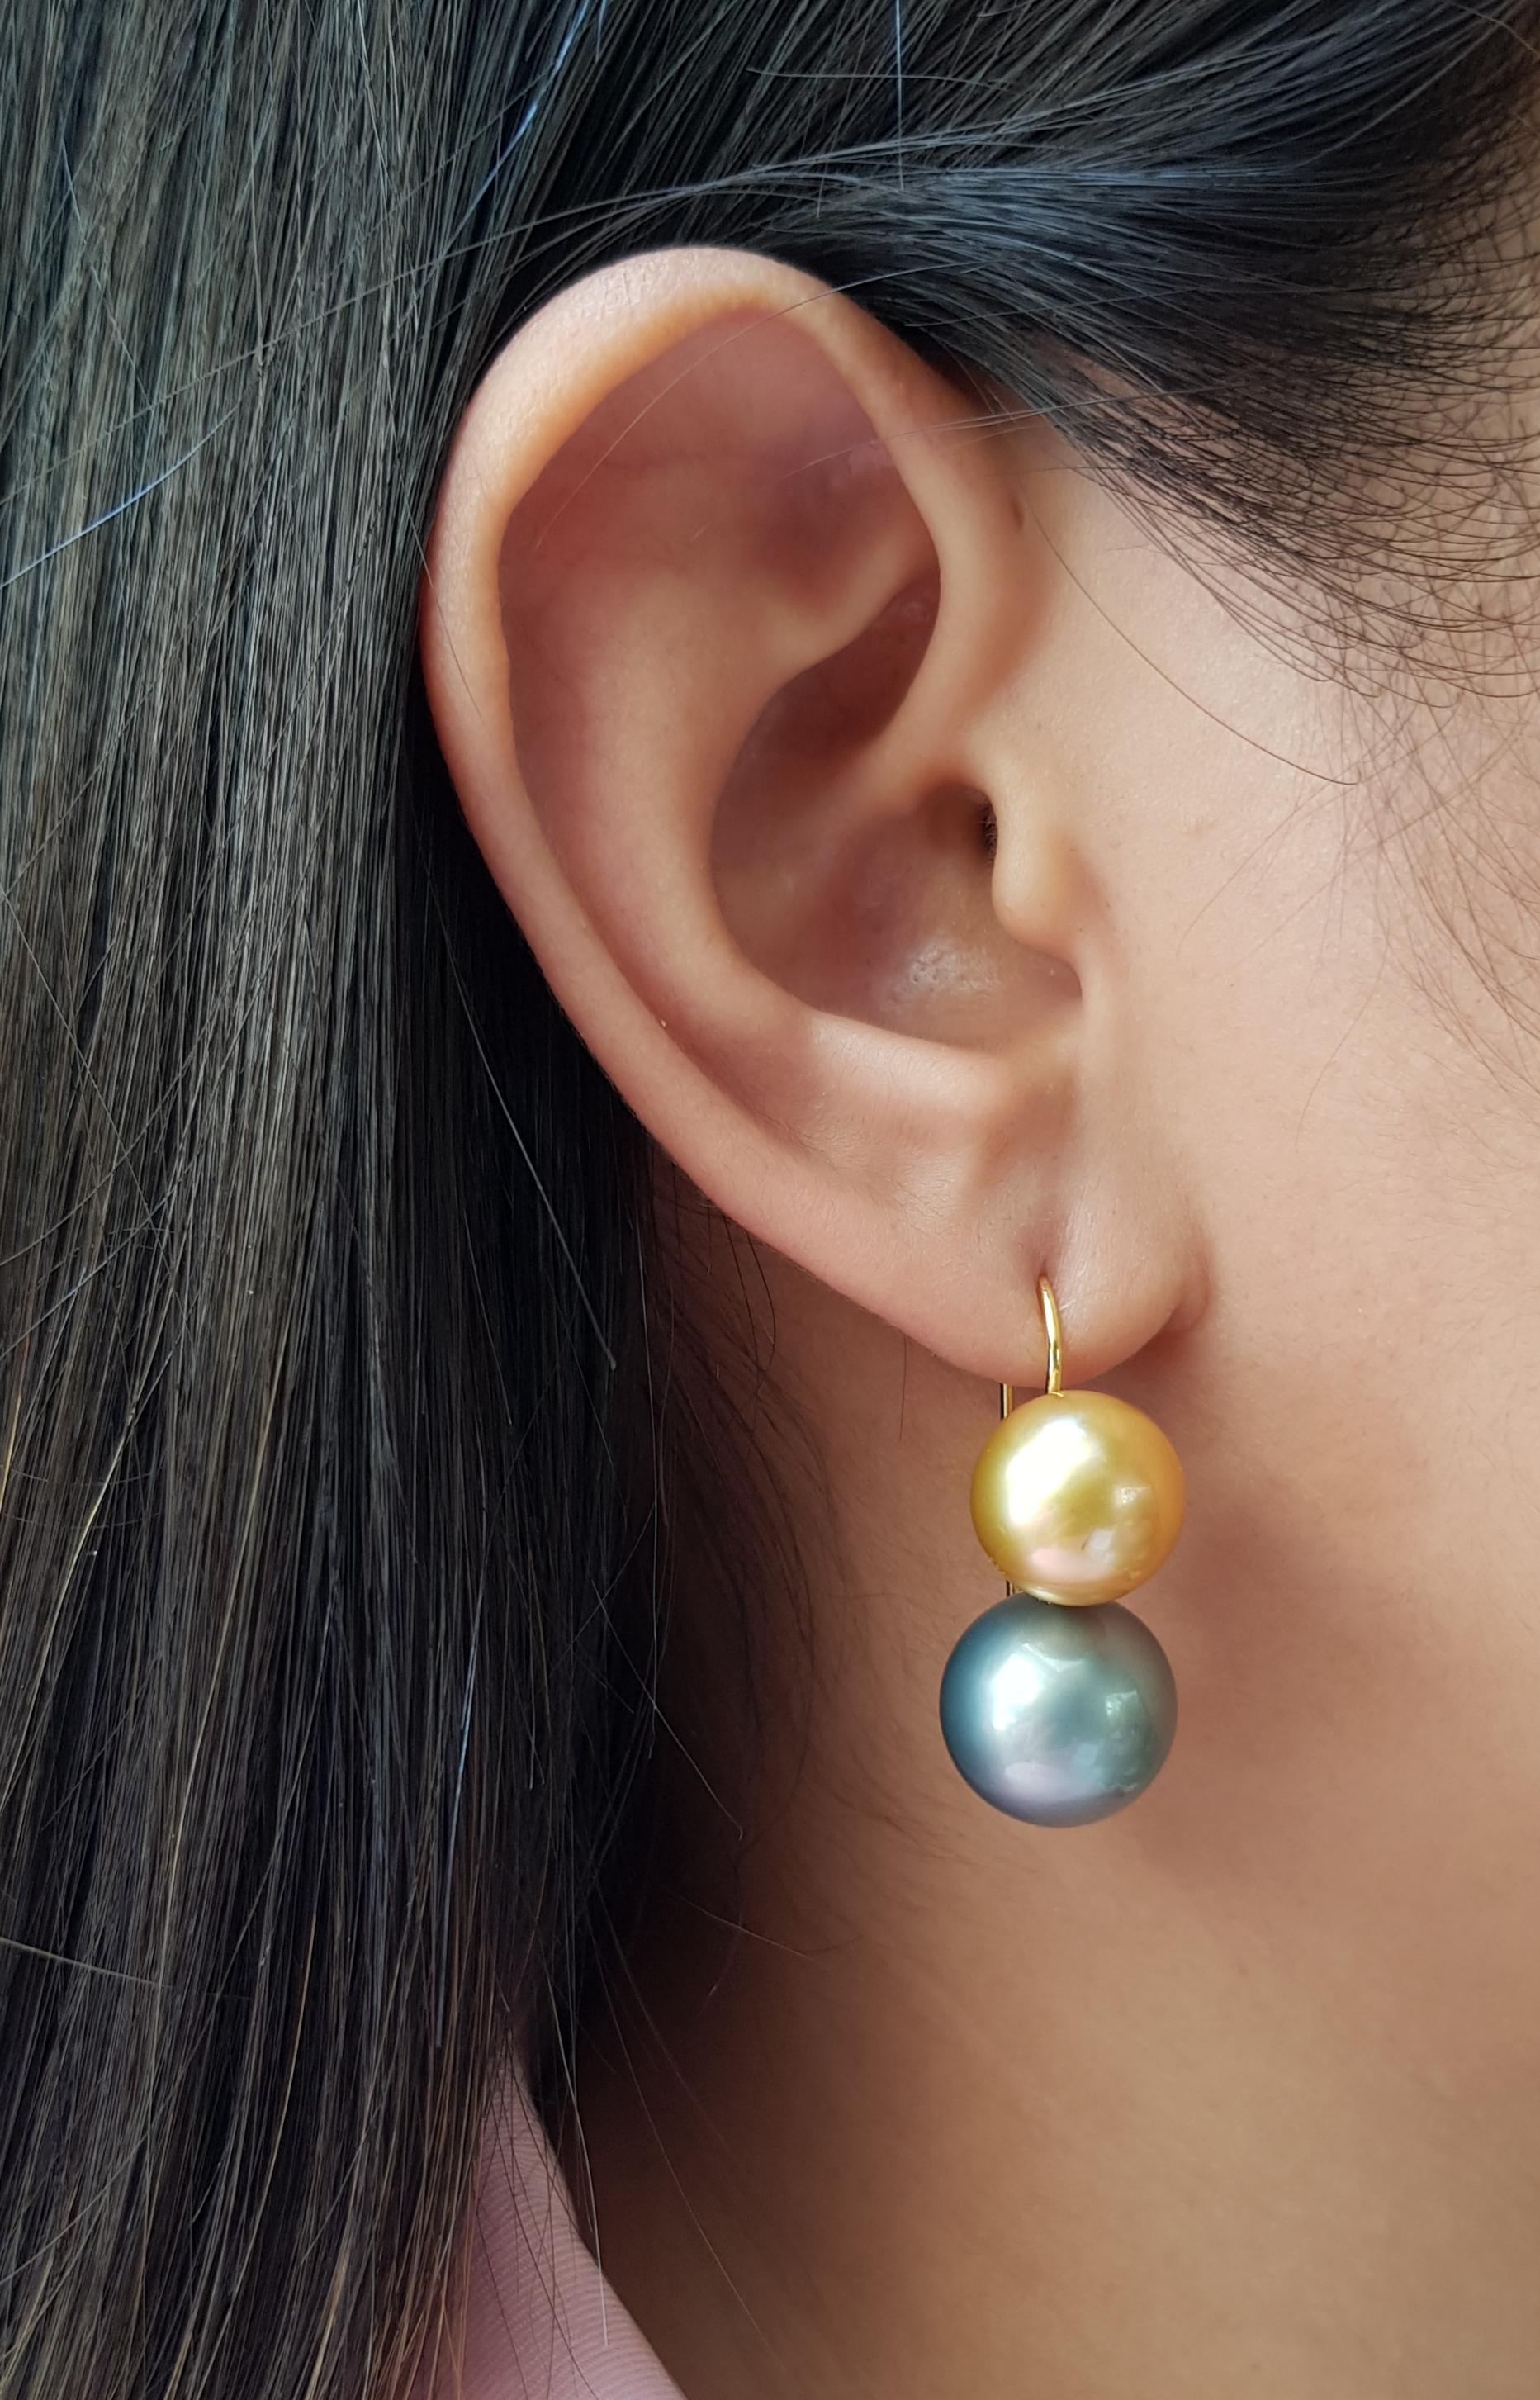 South Sea Pearl Earrings set in 18 Karat Gold Settings

Width: 1.3 cm
Length: 3.1 cm 

